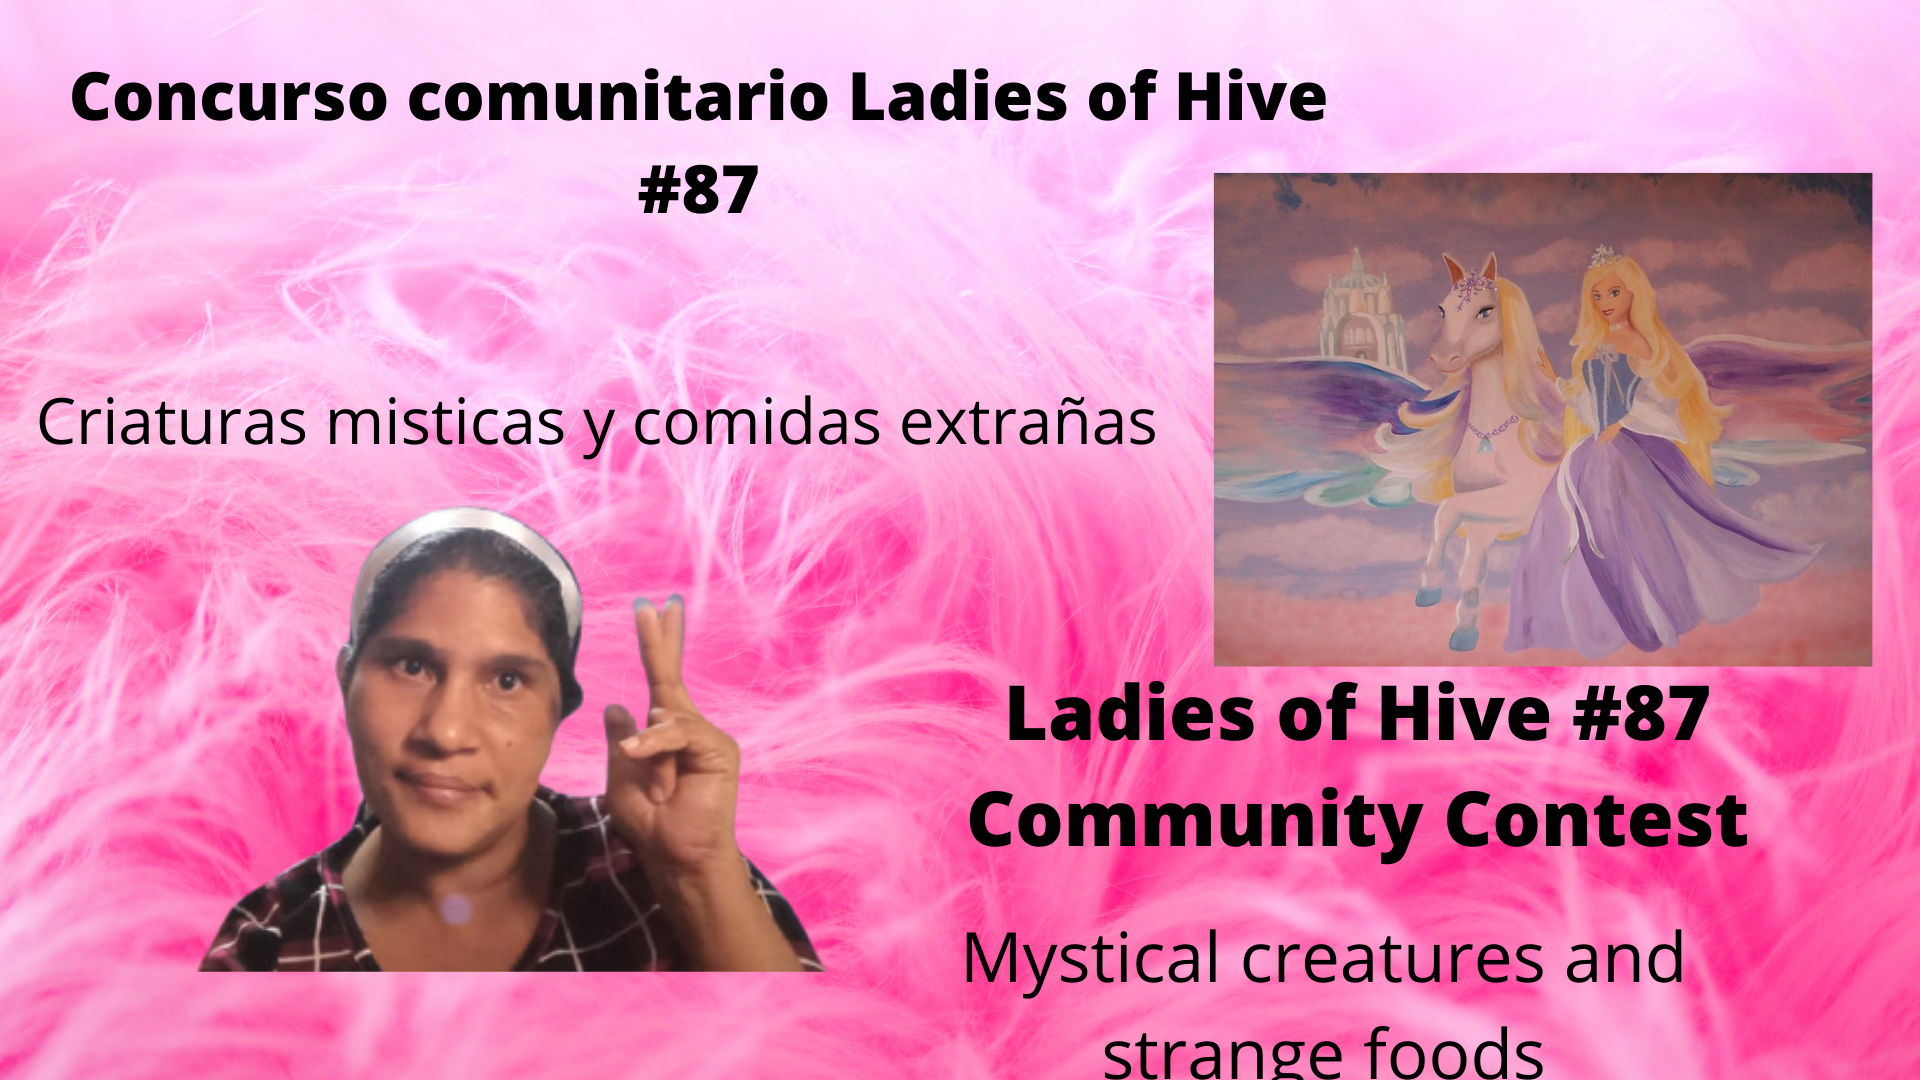 Concurso comunitario Ladies of Hive #87(1).png